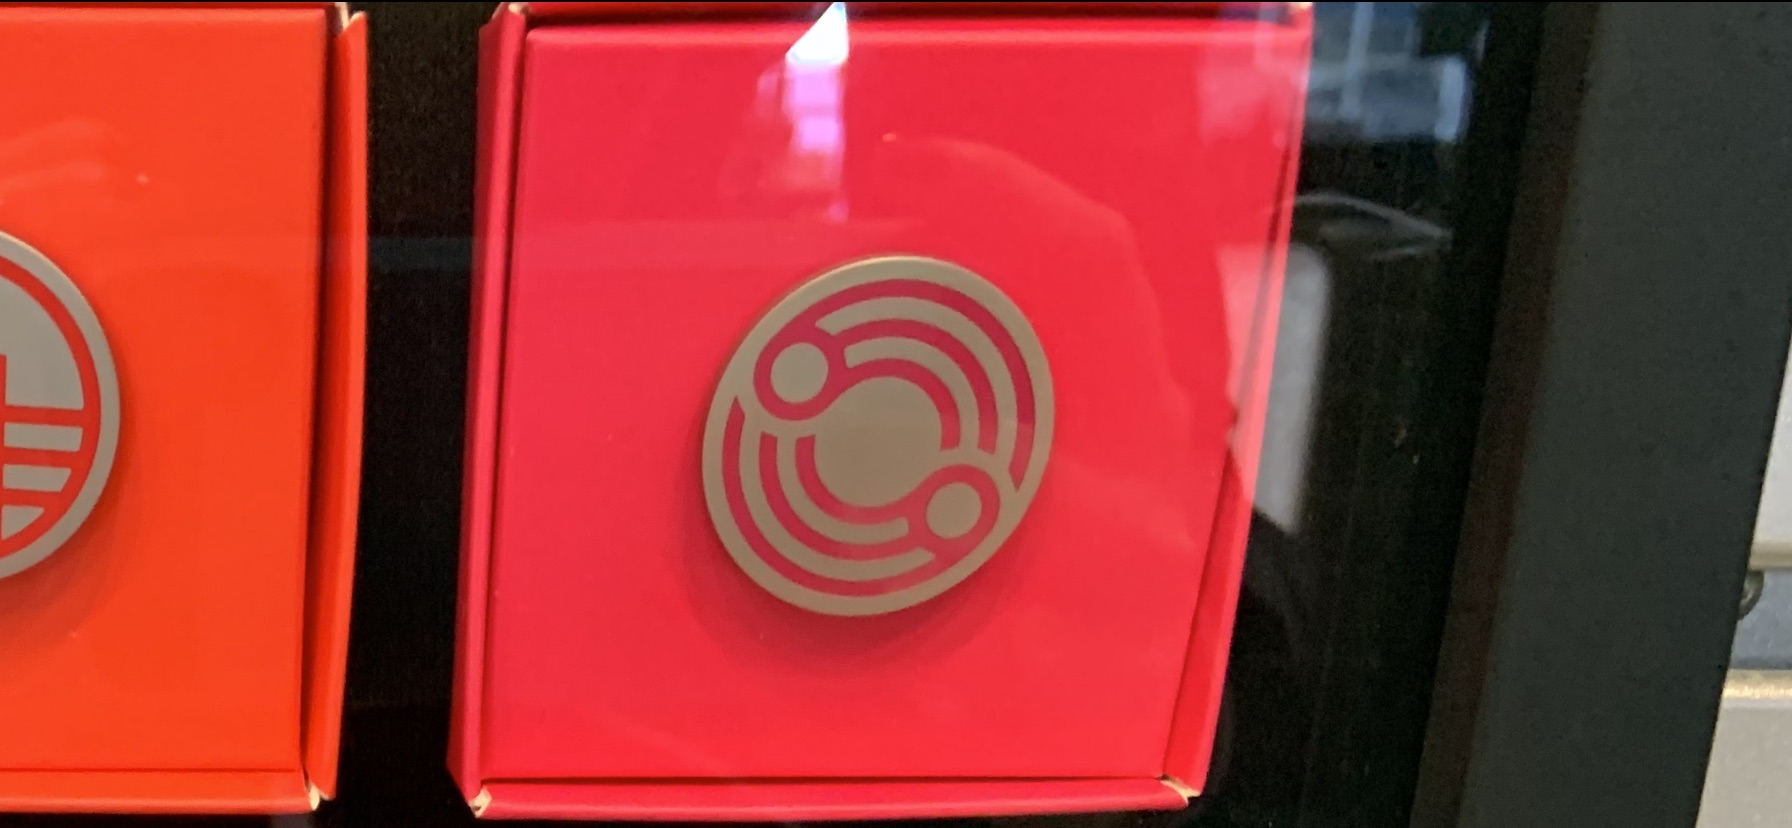 EPCOT pavilion logo pins 12/23/19 23